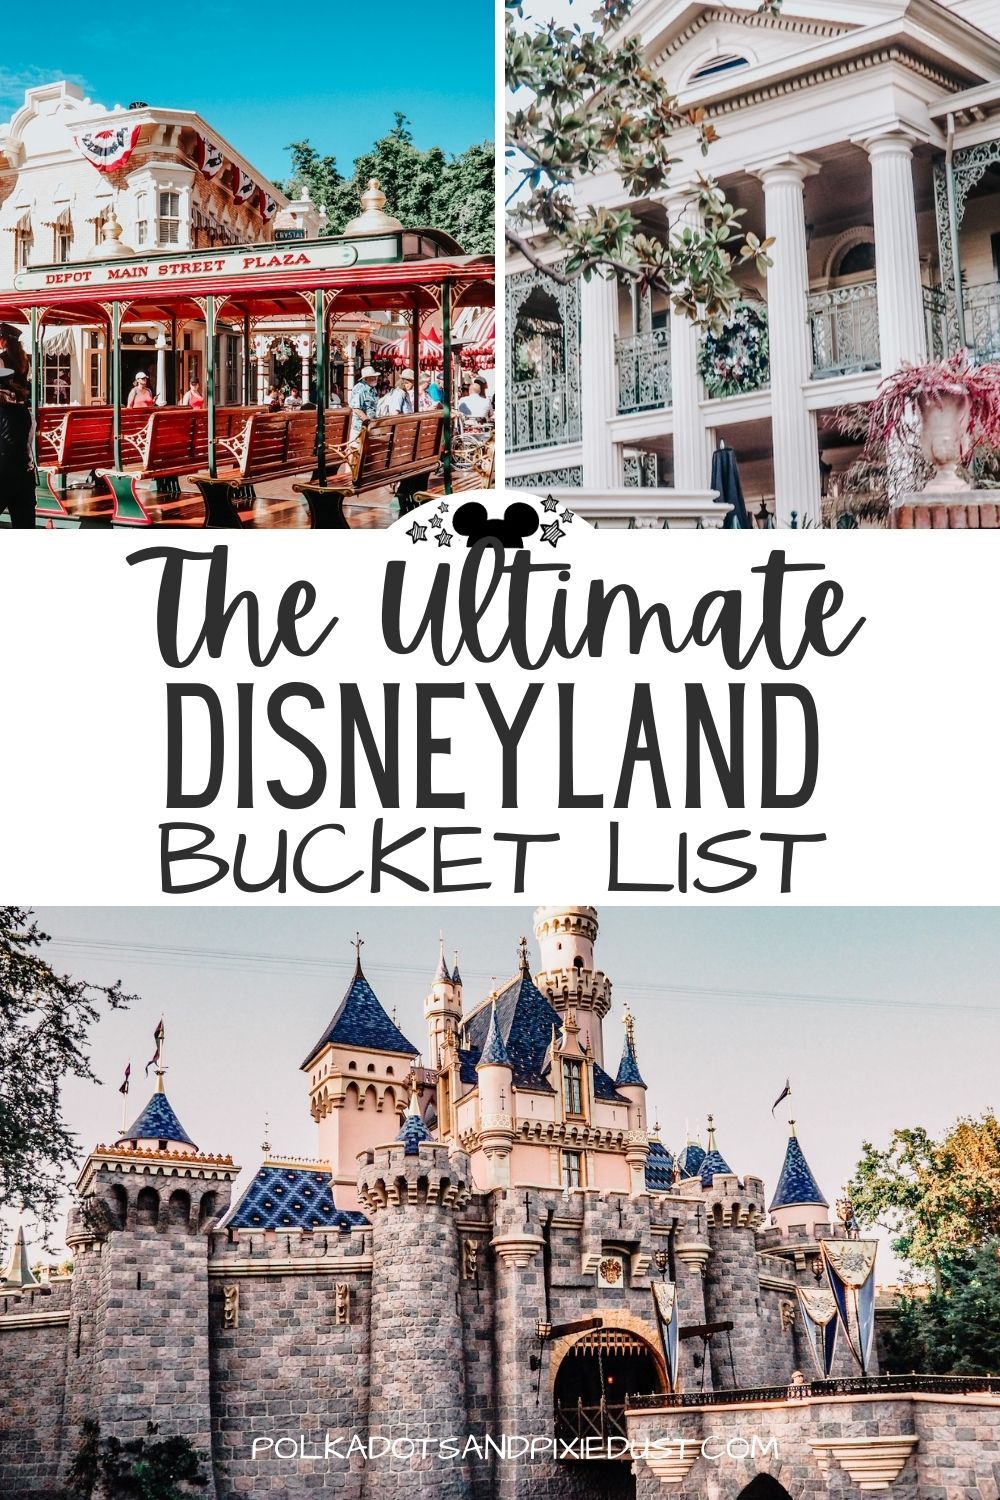 The Ultimate Disneyland Bucket List